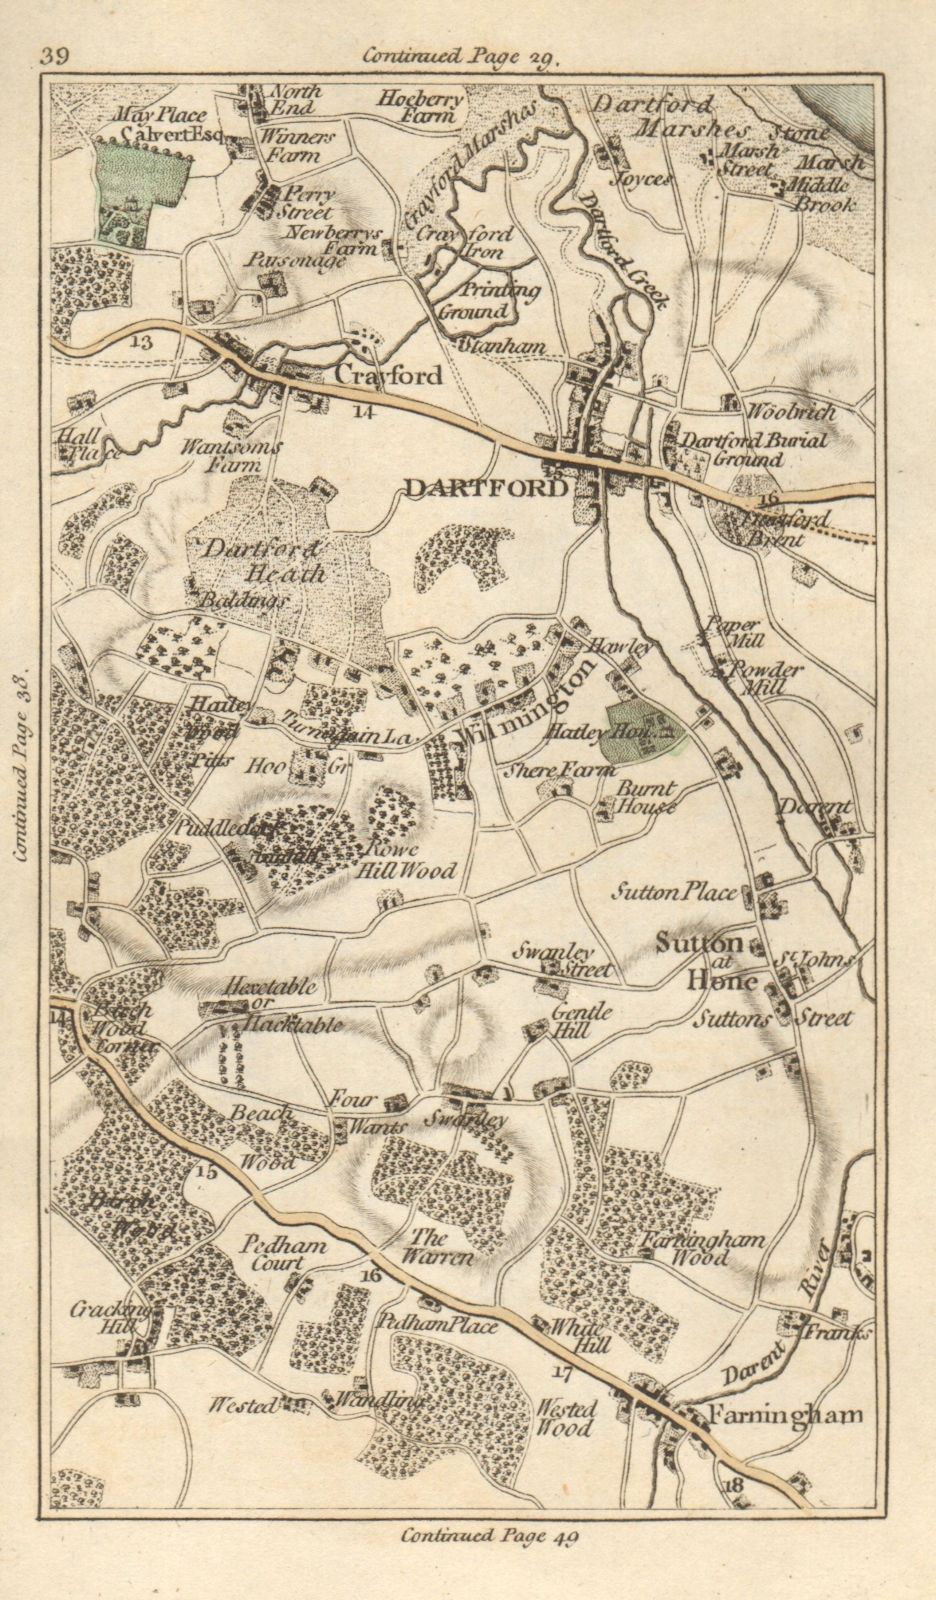 Associate Product DARTFORD Crayford Bexley Sutton at Hone Farningham Wilmington Swanley 1786 map